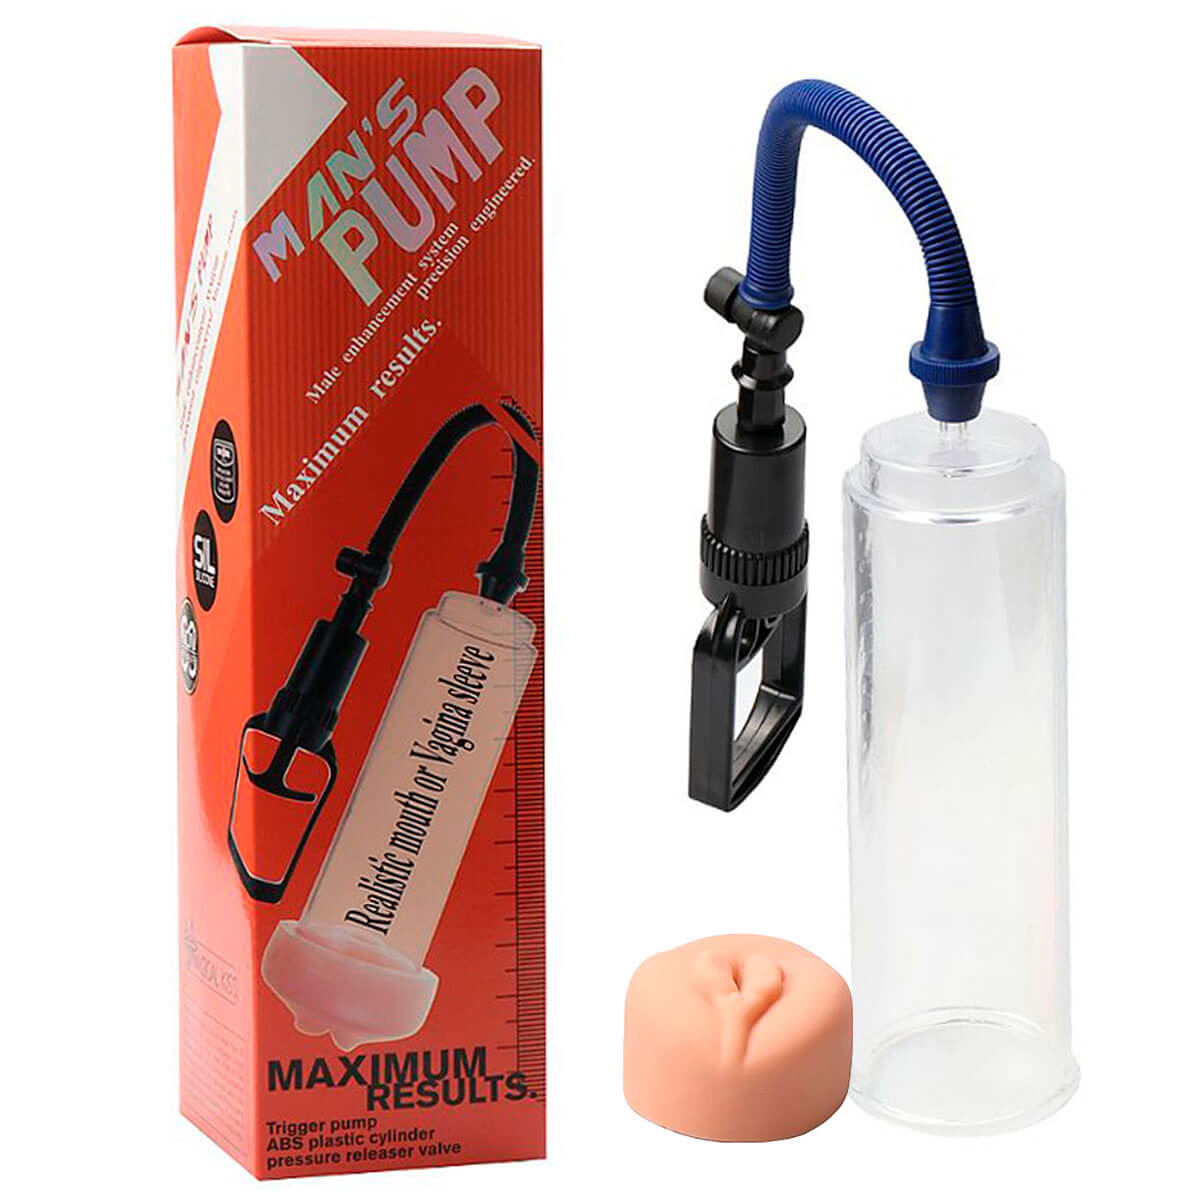 Man’s Pump Bomba Peniana Manual com Bocal Formato Vagina em CyberSkin 20x6 cm Miss Collection